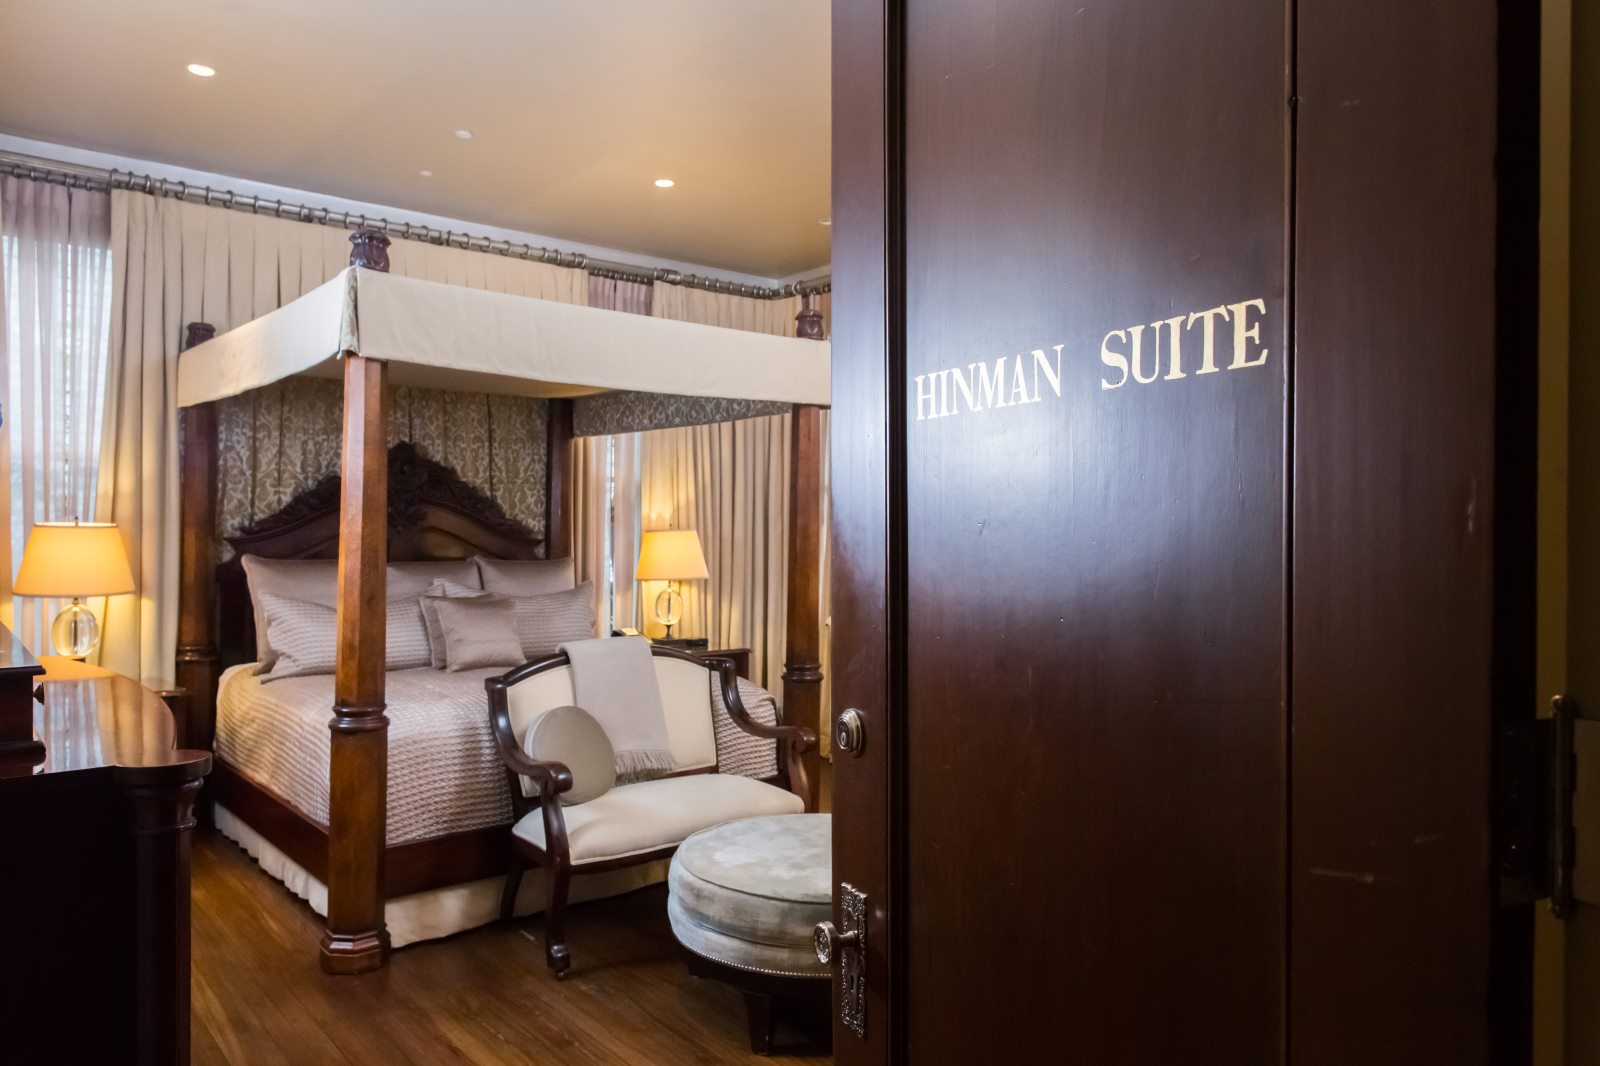 Hinman Suite at Stonehurst Place, Atlanta GA hotel